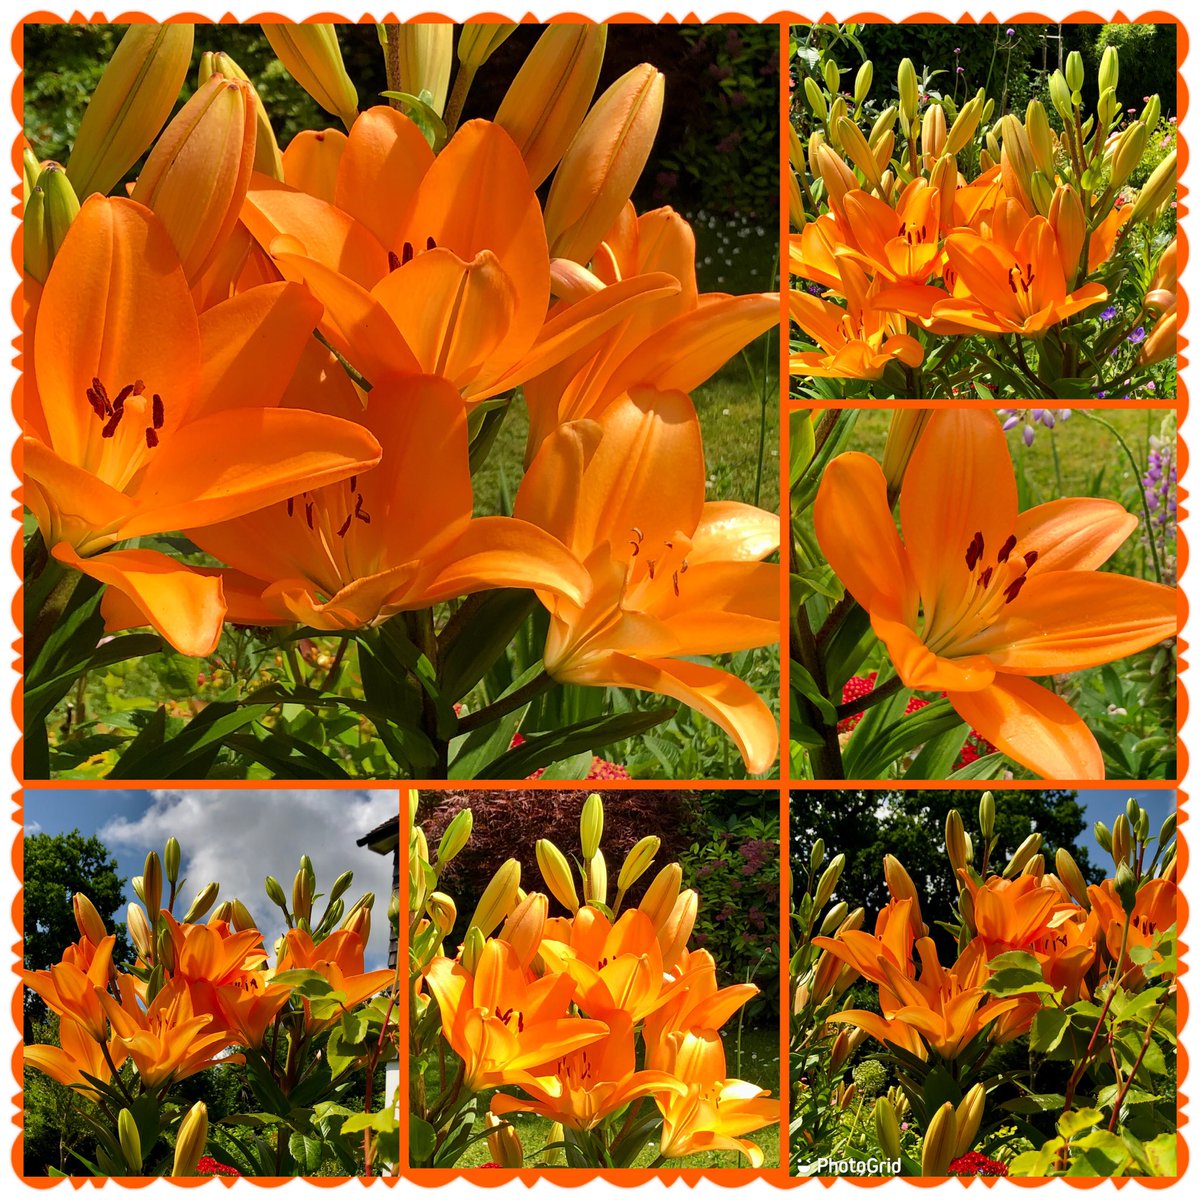 Hot lilies for a hot day 🧡🧡#SixOnSaturday #Lilies #OrangeCountyLily #FarmerGracy #Flowers #Sunny #Orange #MyGarden